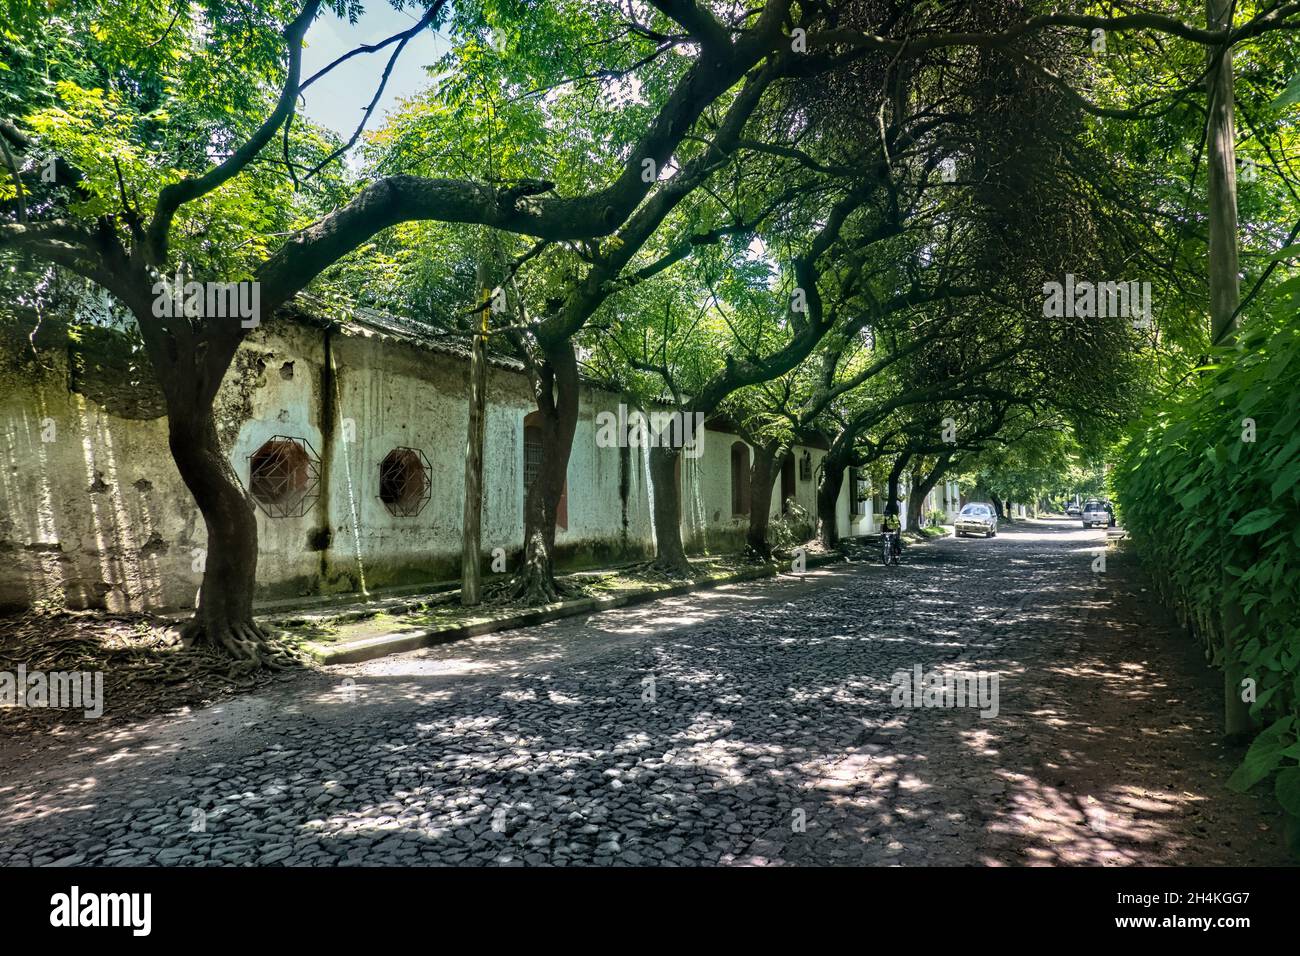 Quiet cobblestone street and tunnel of trees in Antigua, Guatemala,. Stock Photo